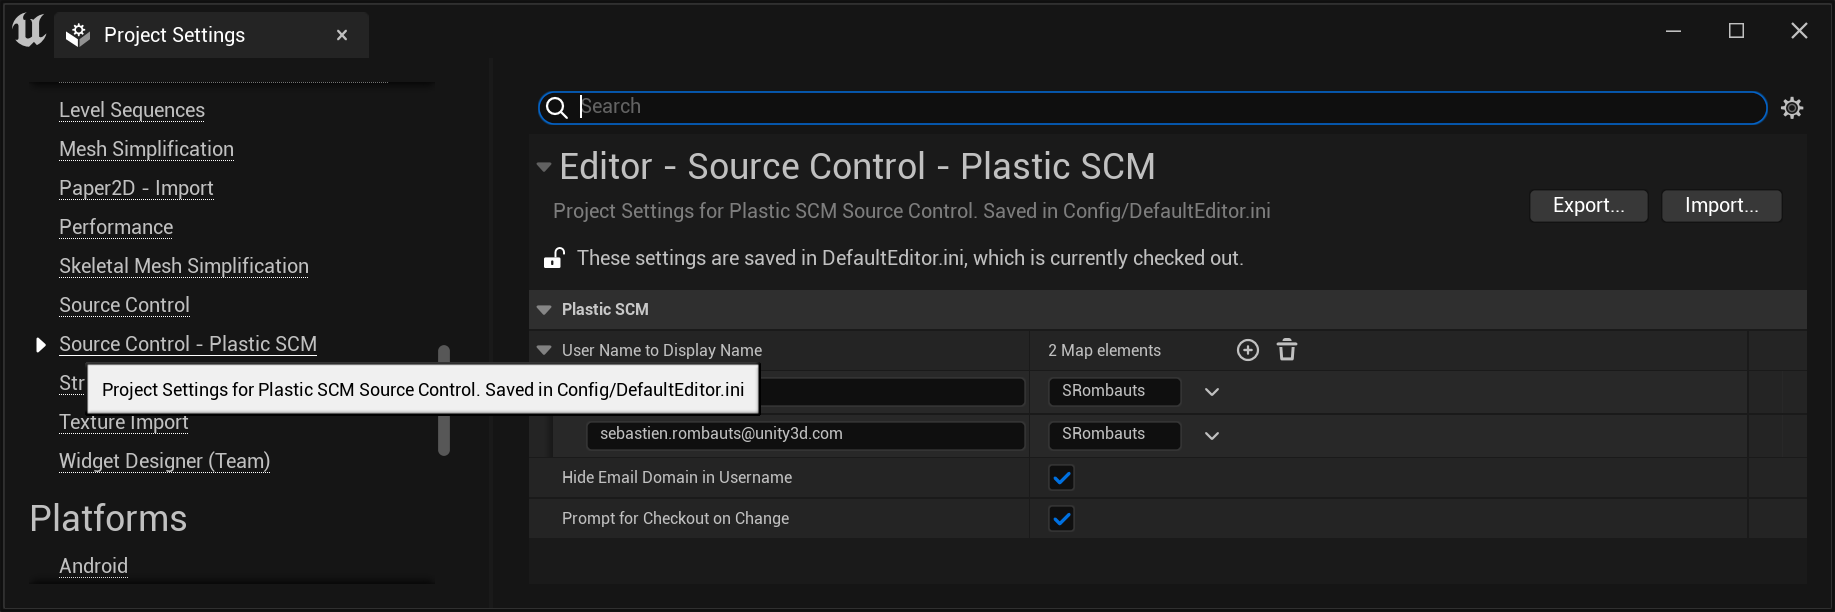 Project Settings - Source Control - Plastic SCM